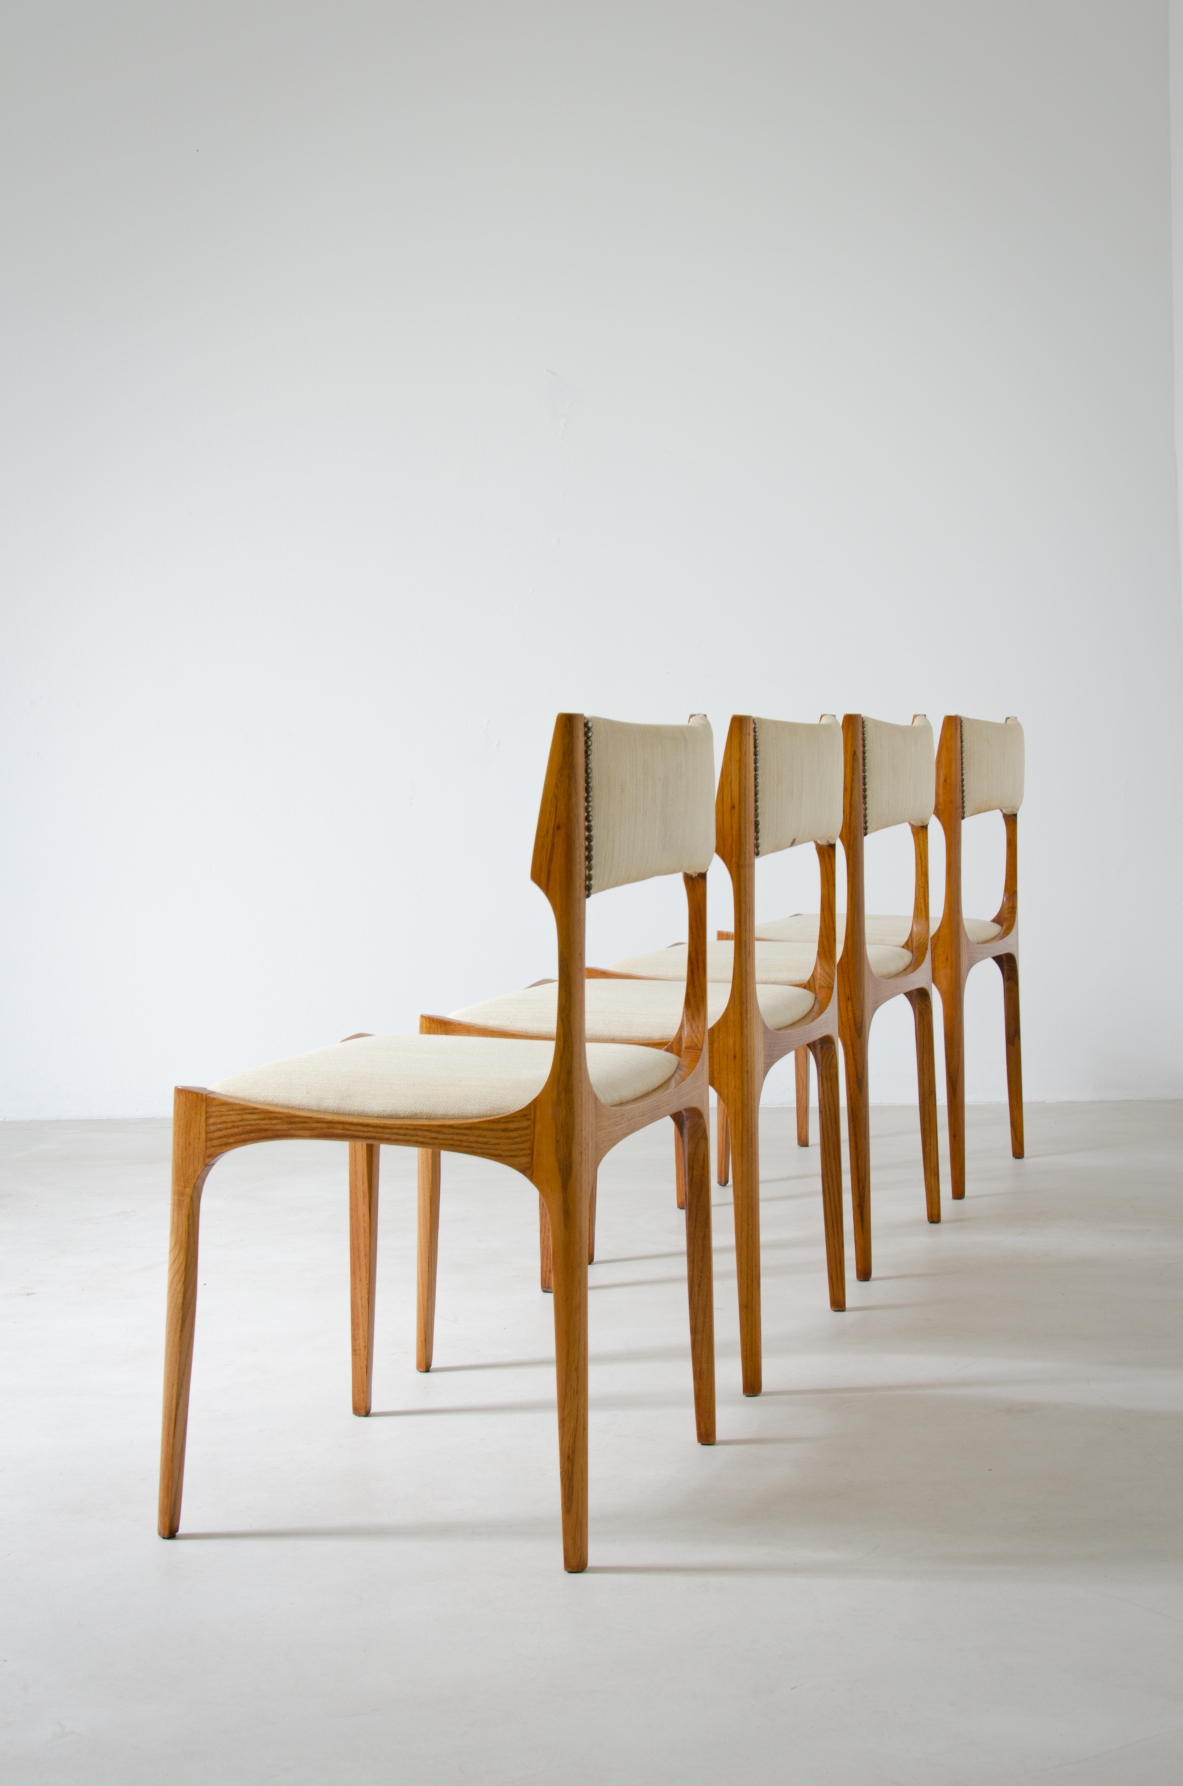 Giuseppe Gibelli  Set di 4 sedie in frassino e tessuto imbottito.  Manifattura Sormani, 1963.